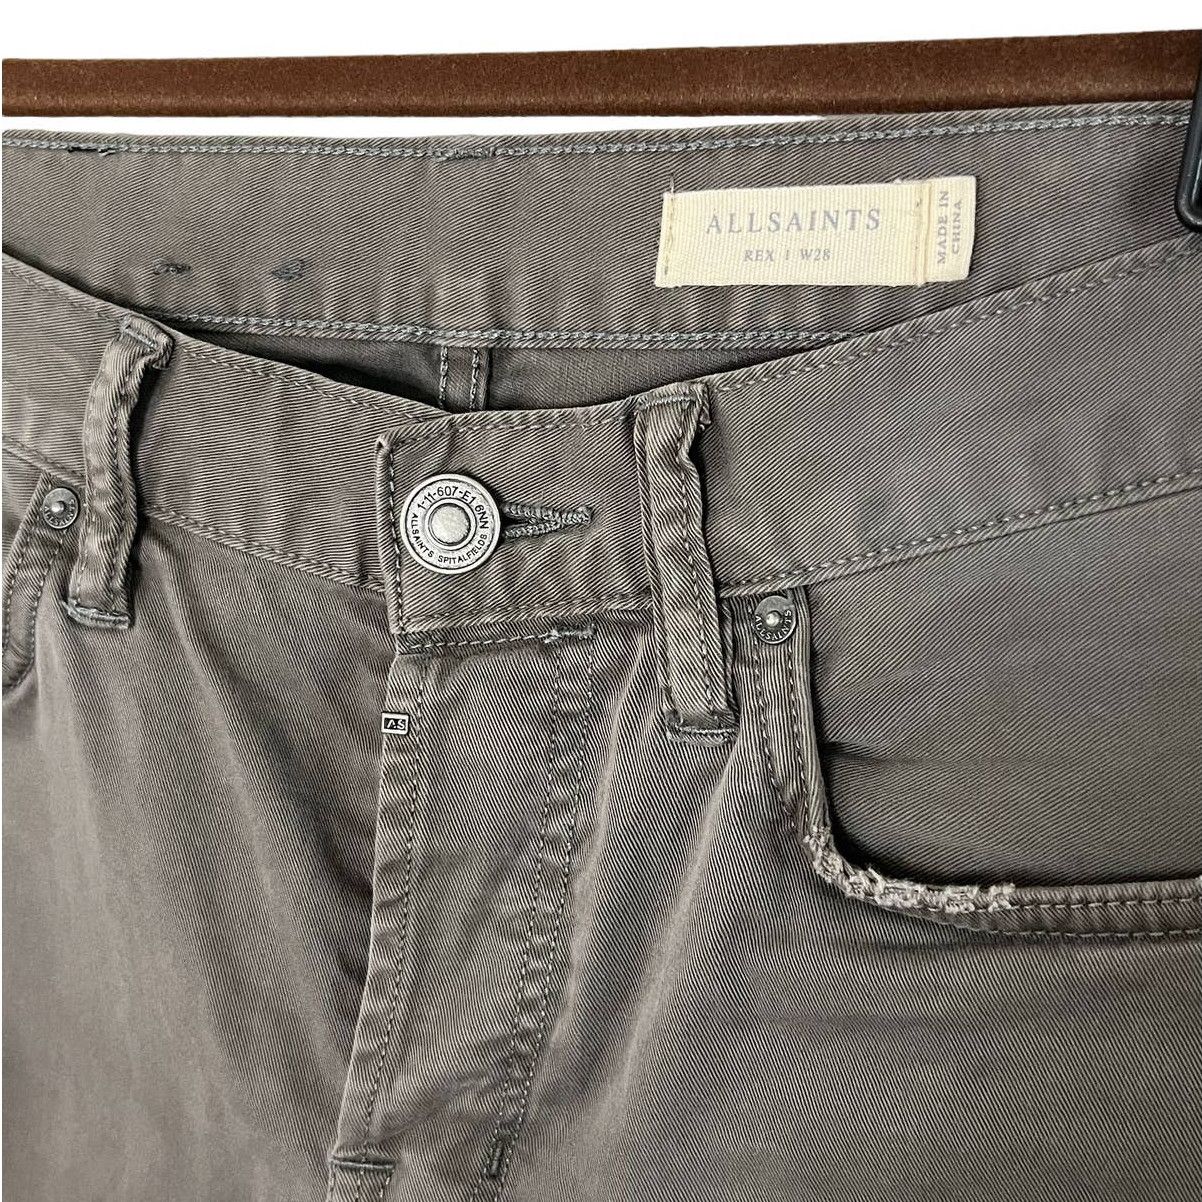 Allsaints AllSaints Size 28 Slate Gray Cotton Jeans Button Fly Size US 28 / EU 44 - 7 Thumbnail